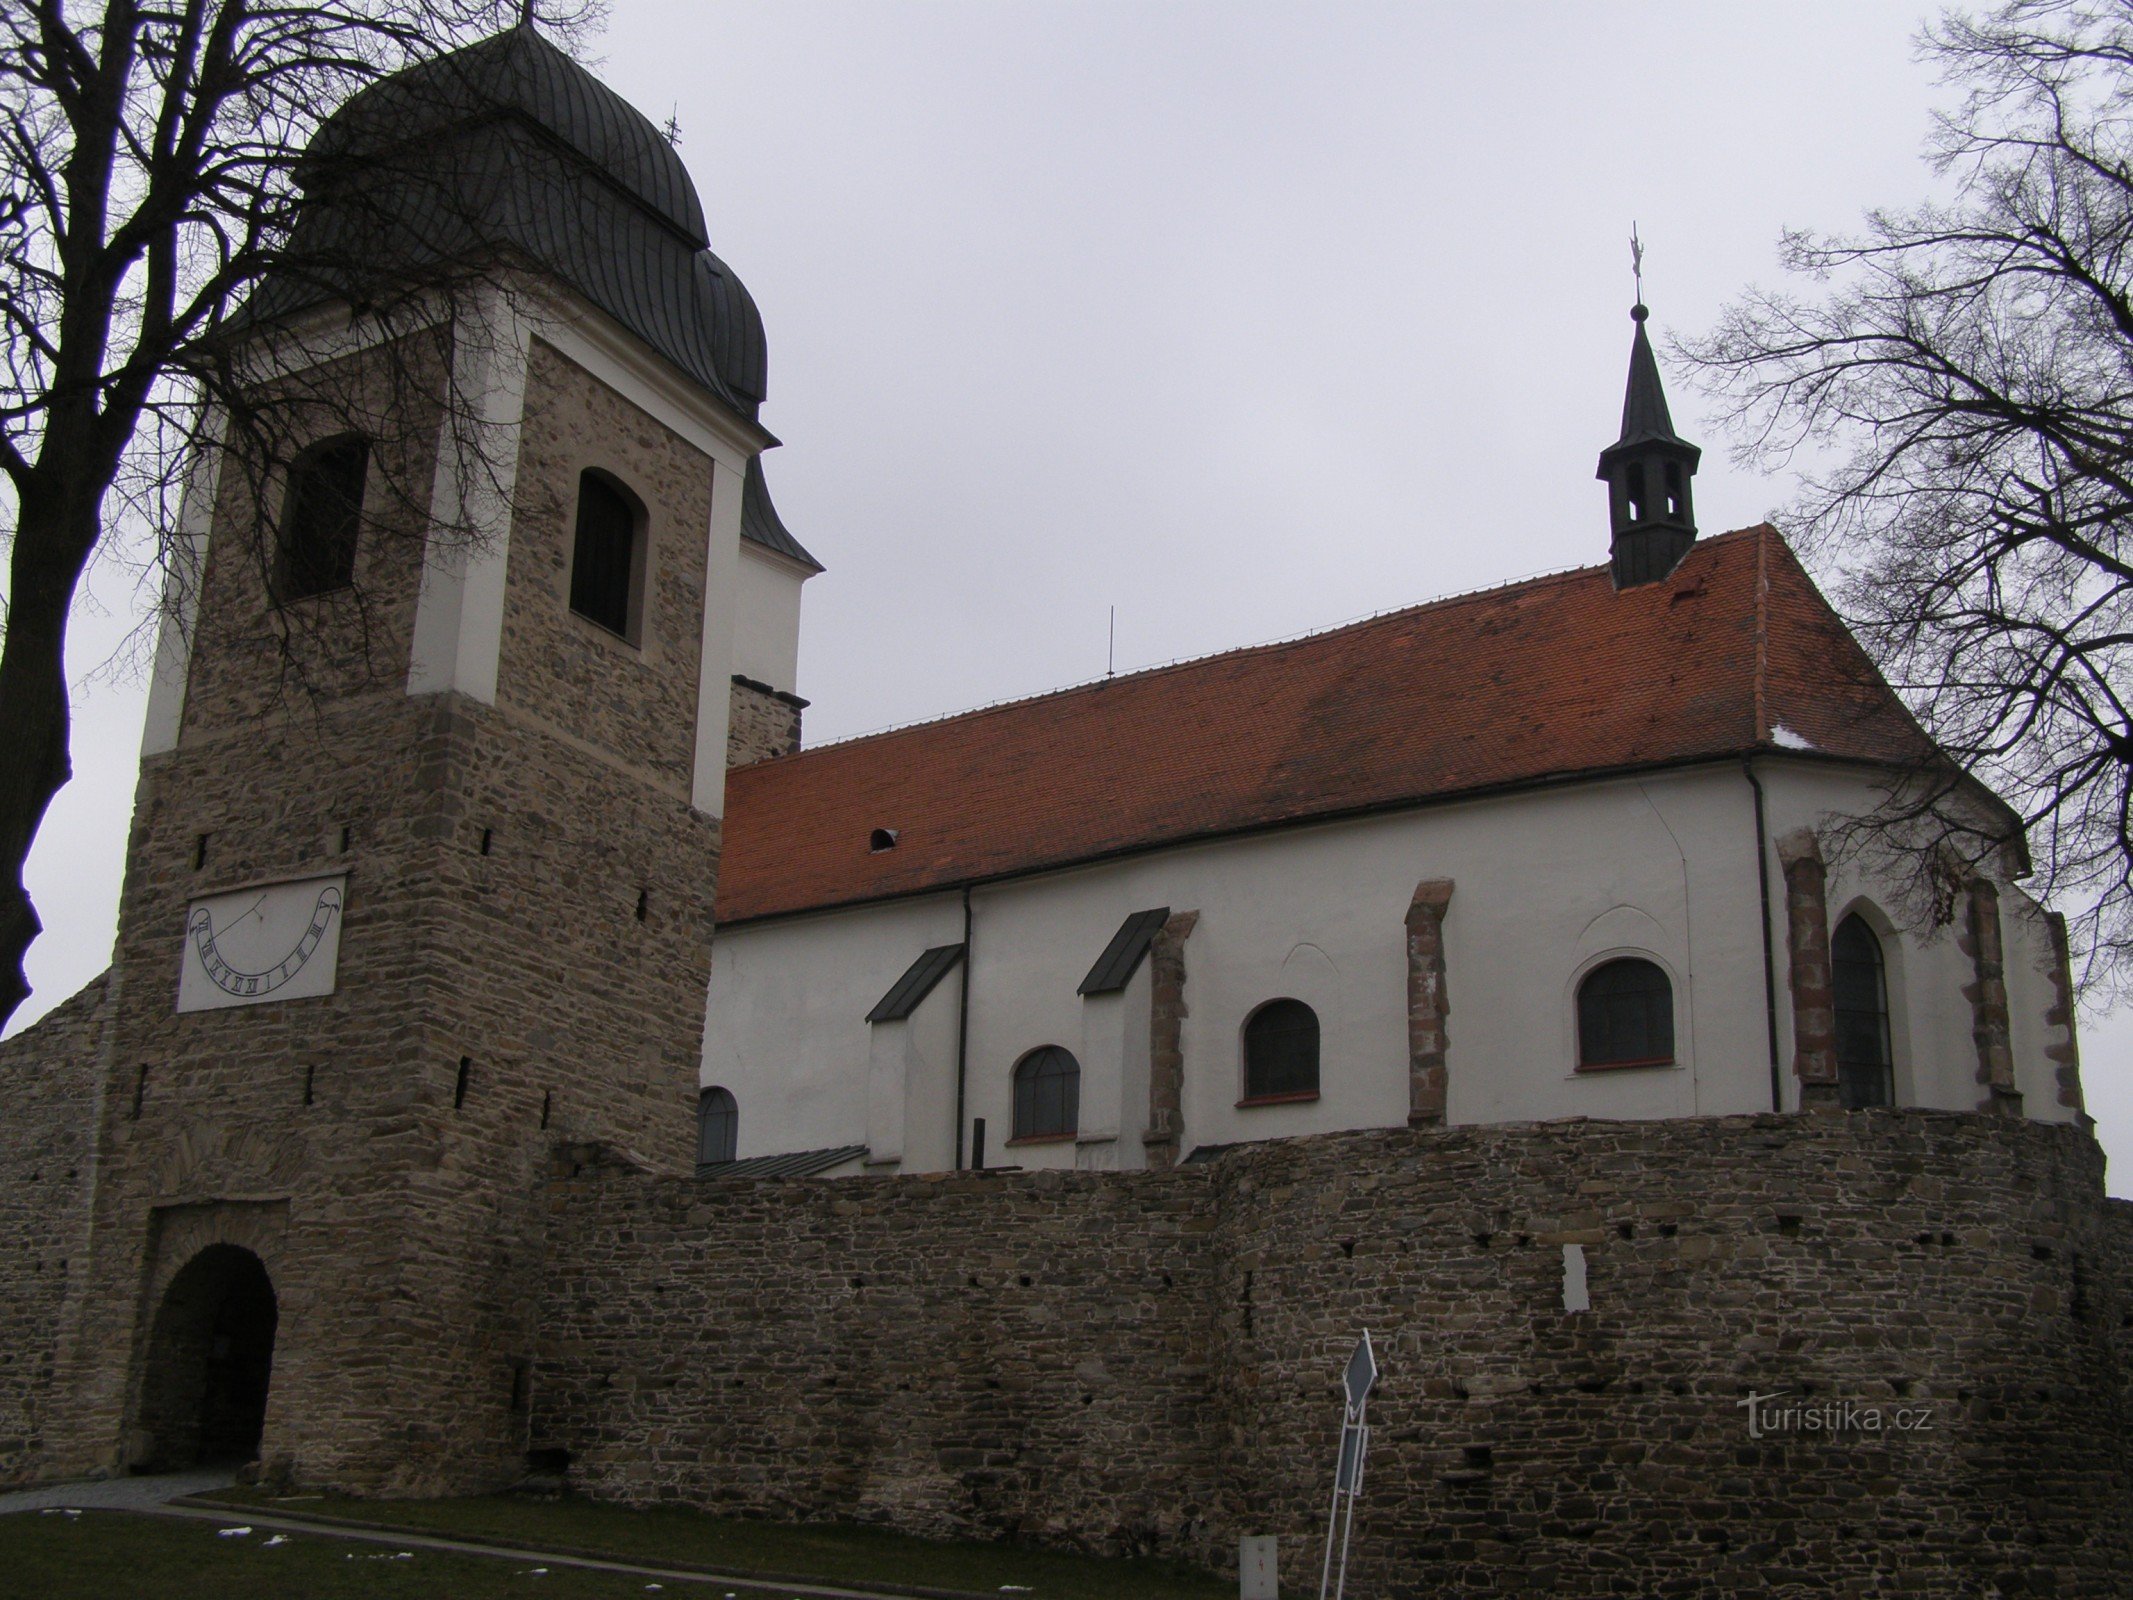 Velká Bíteš - une ville avec une église-forteresse